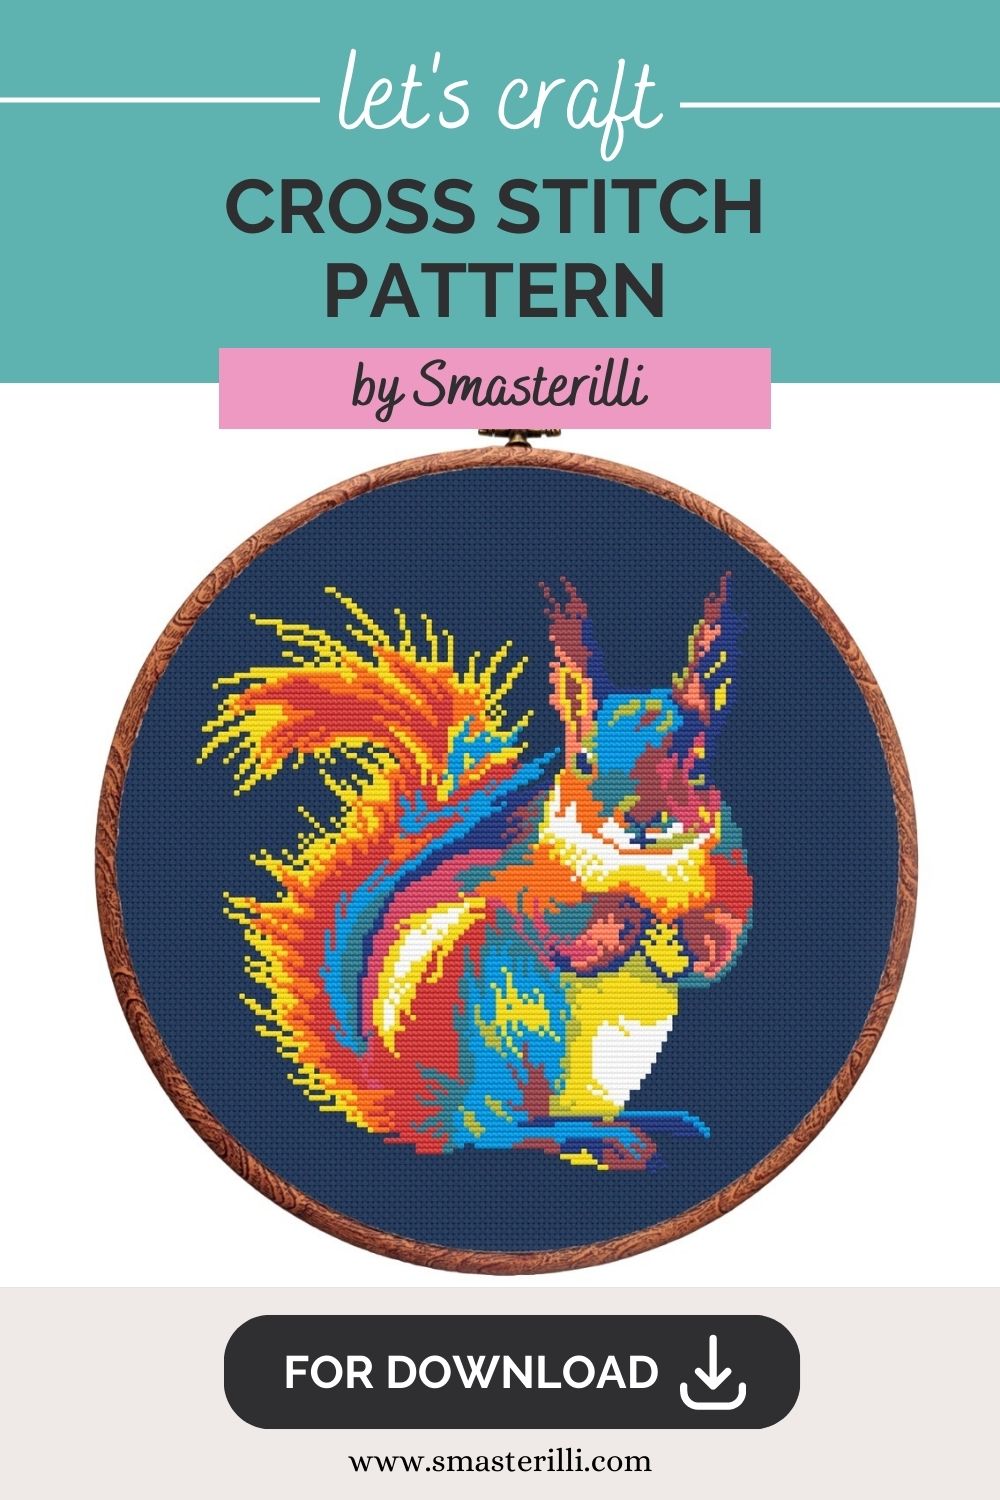 Rainbow animals: colorful squirrel cross stitch pattern PDf by Smasterilli. Digital cross stitch pattern for instant download. #smasterilli #crossstitch #crossstitchpattern #rainbowanimals #squirrel #popart